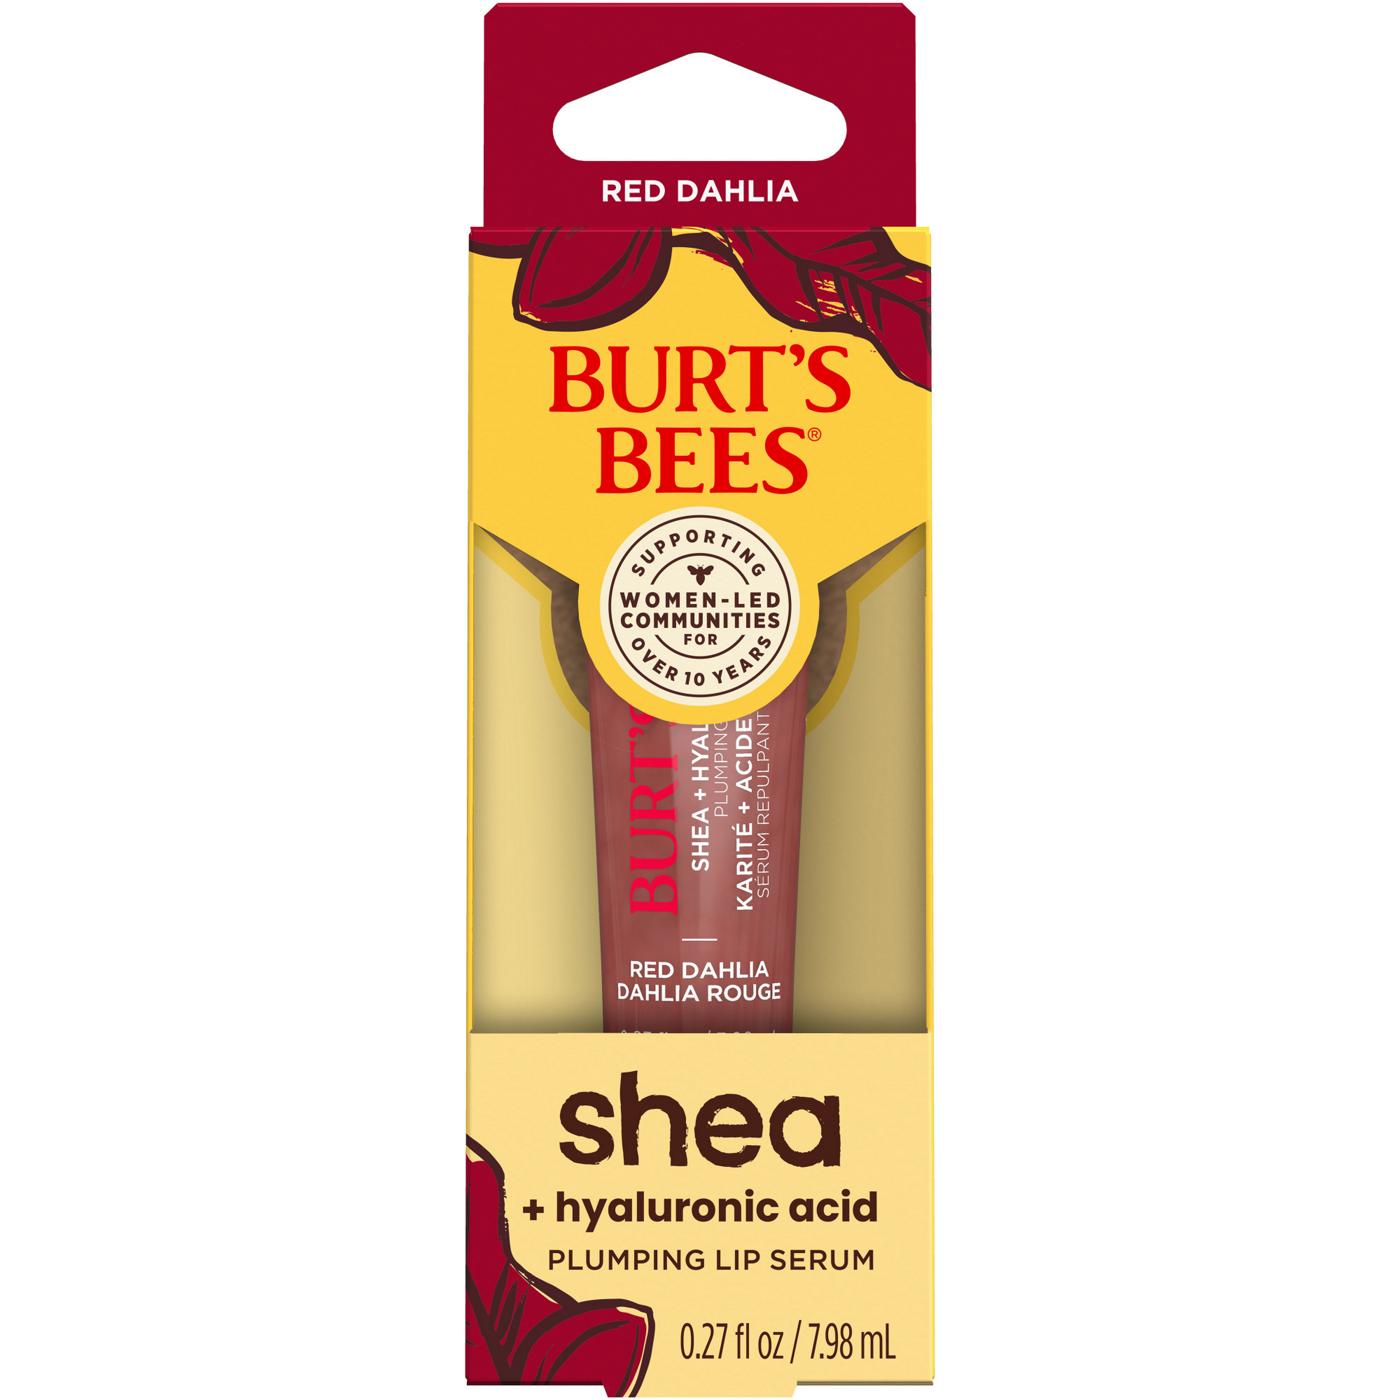 Burt's Bees Shea Plumping Lip Serum - Red Dahlia; image 1 of 5